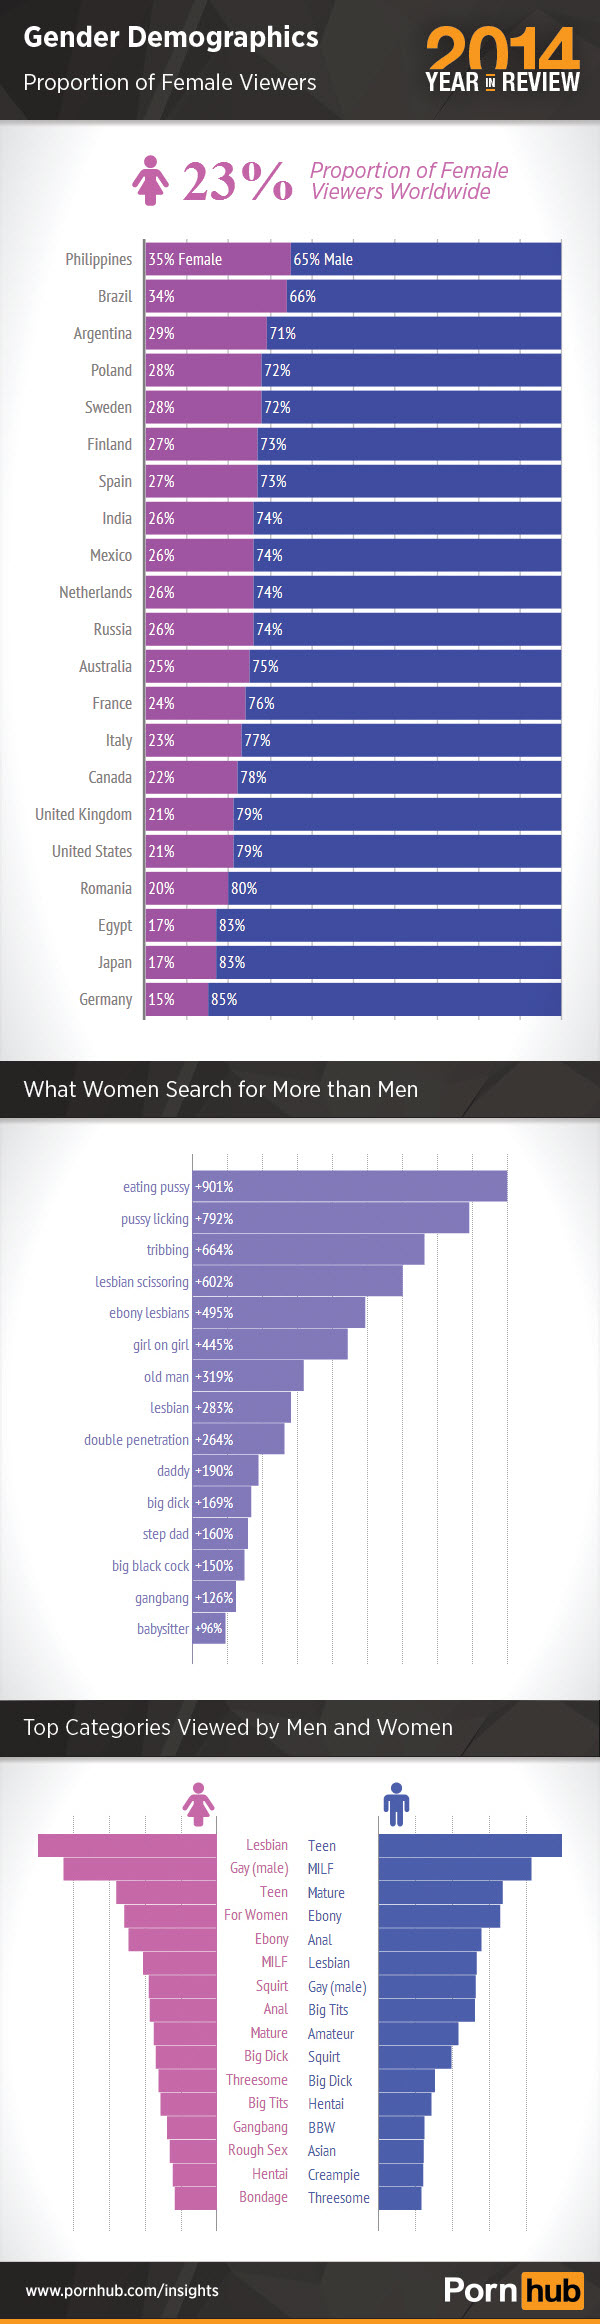 3-pornhub-2014-gender-demographics